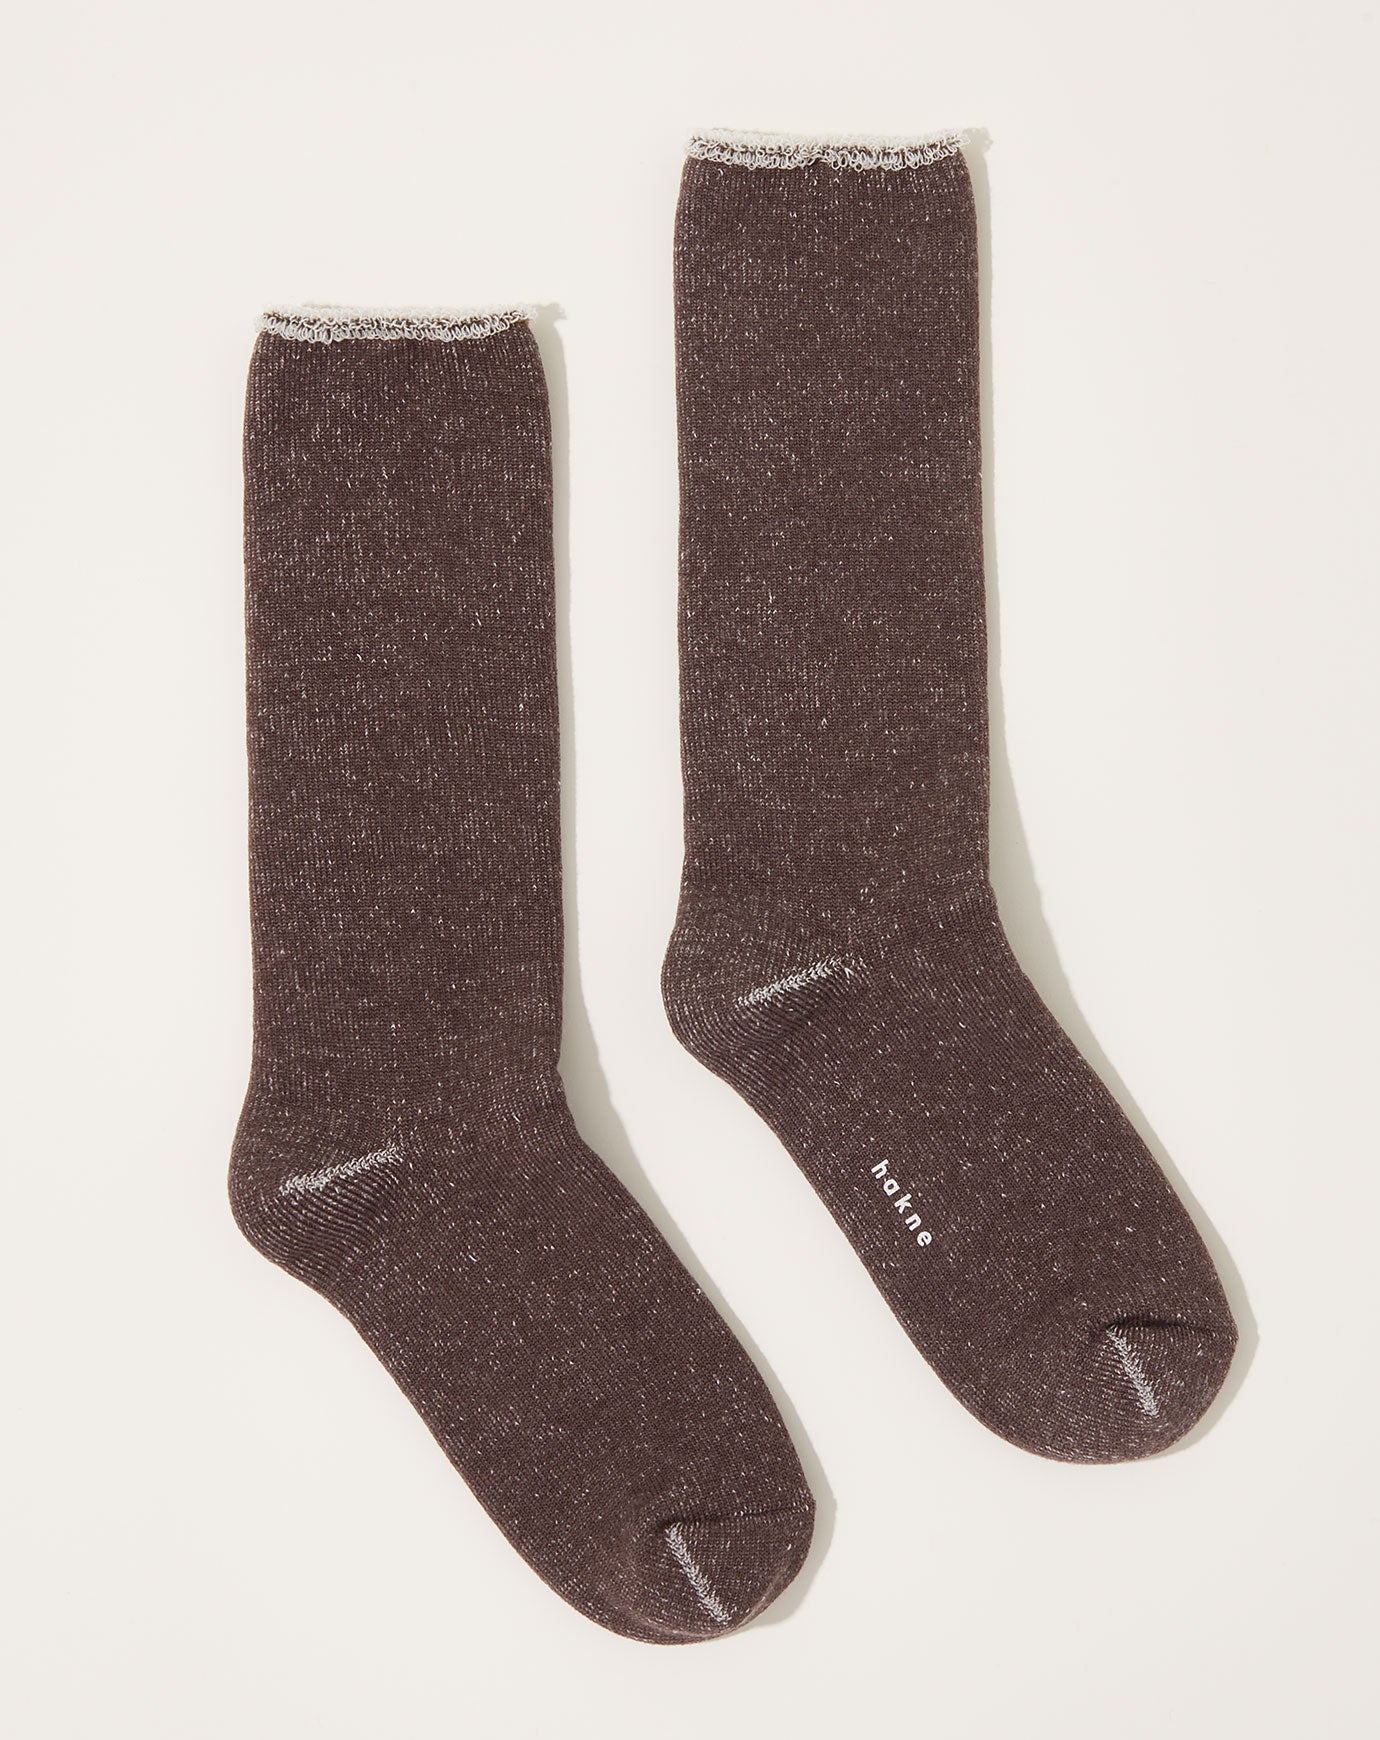 Hakne Cotton Wool Pile Socks in Mocha Brown